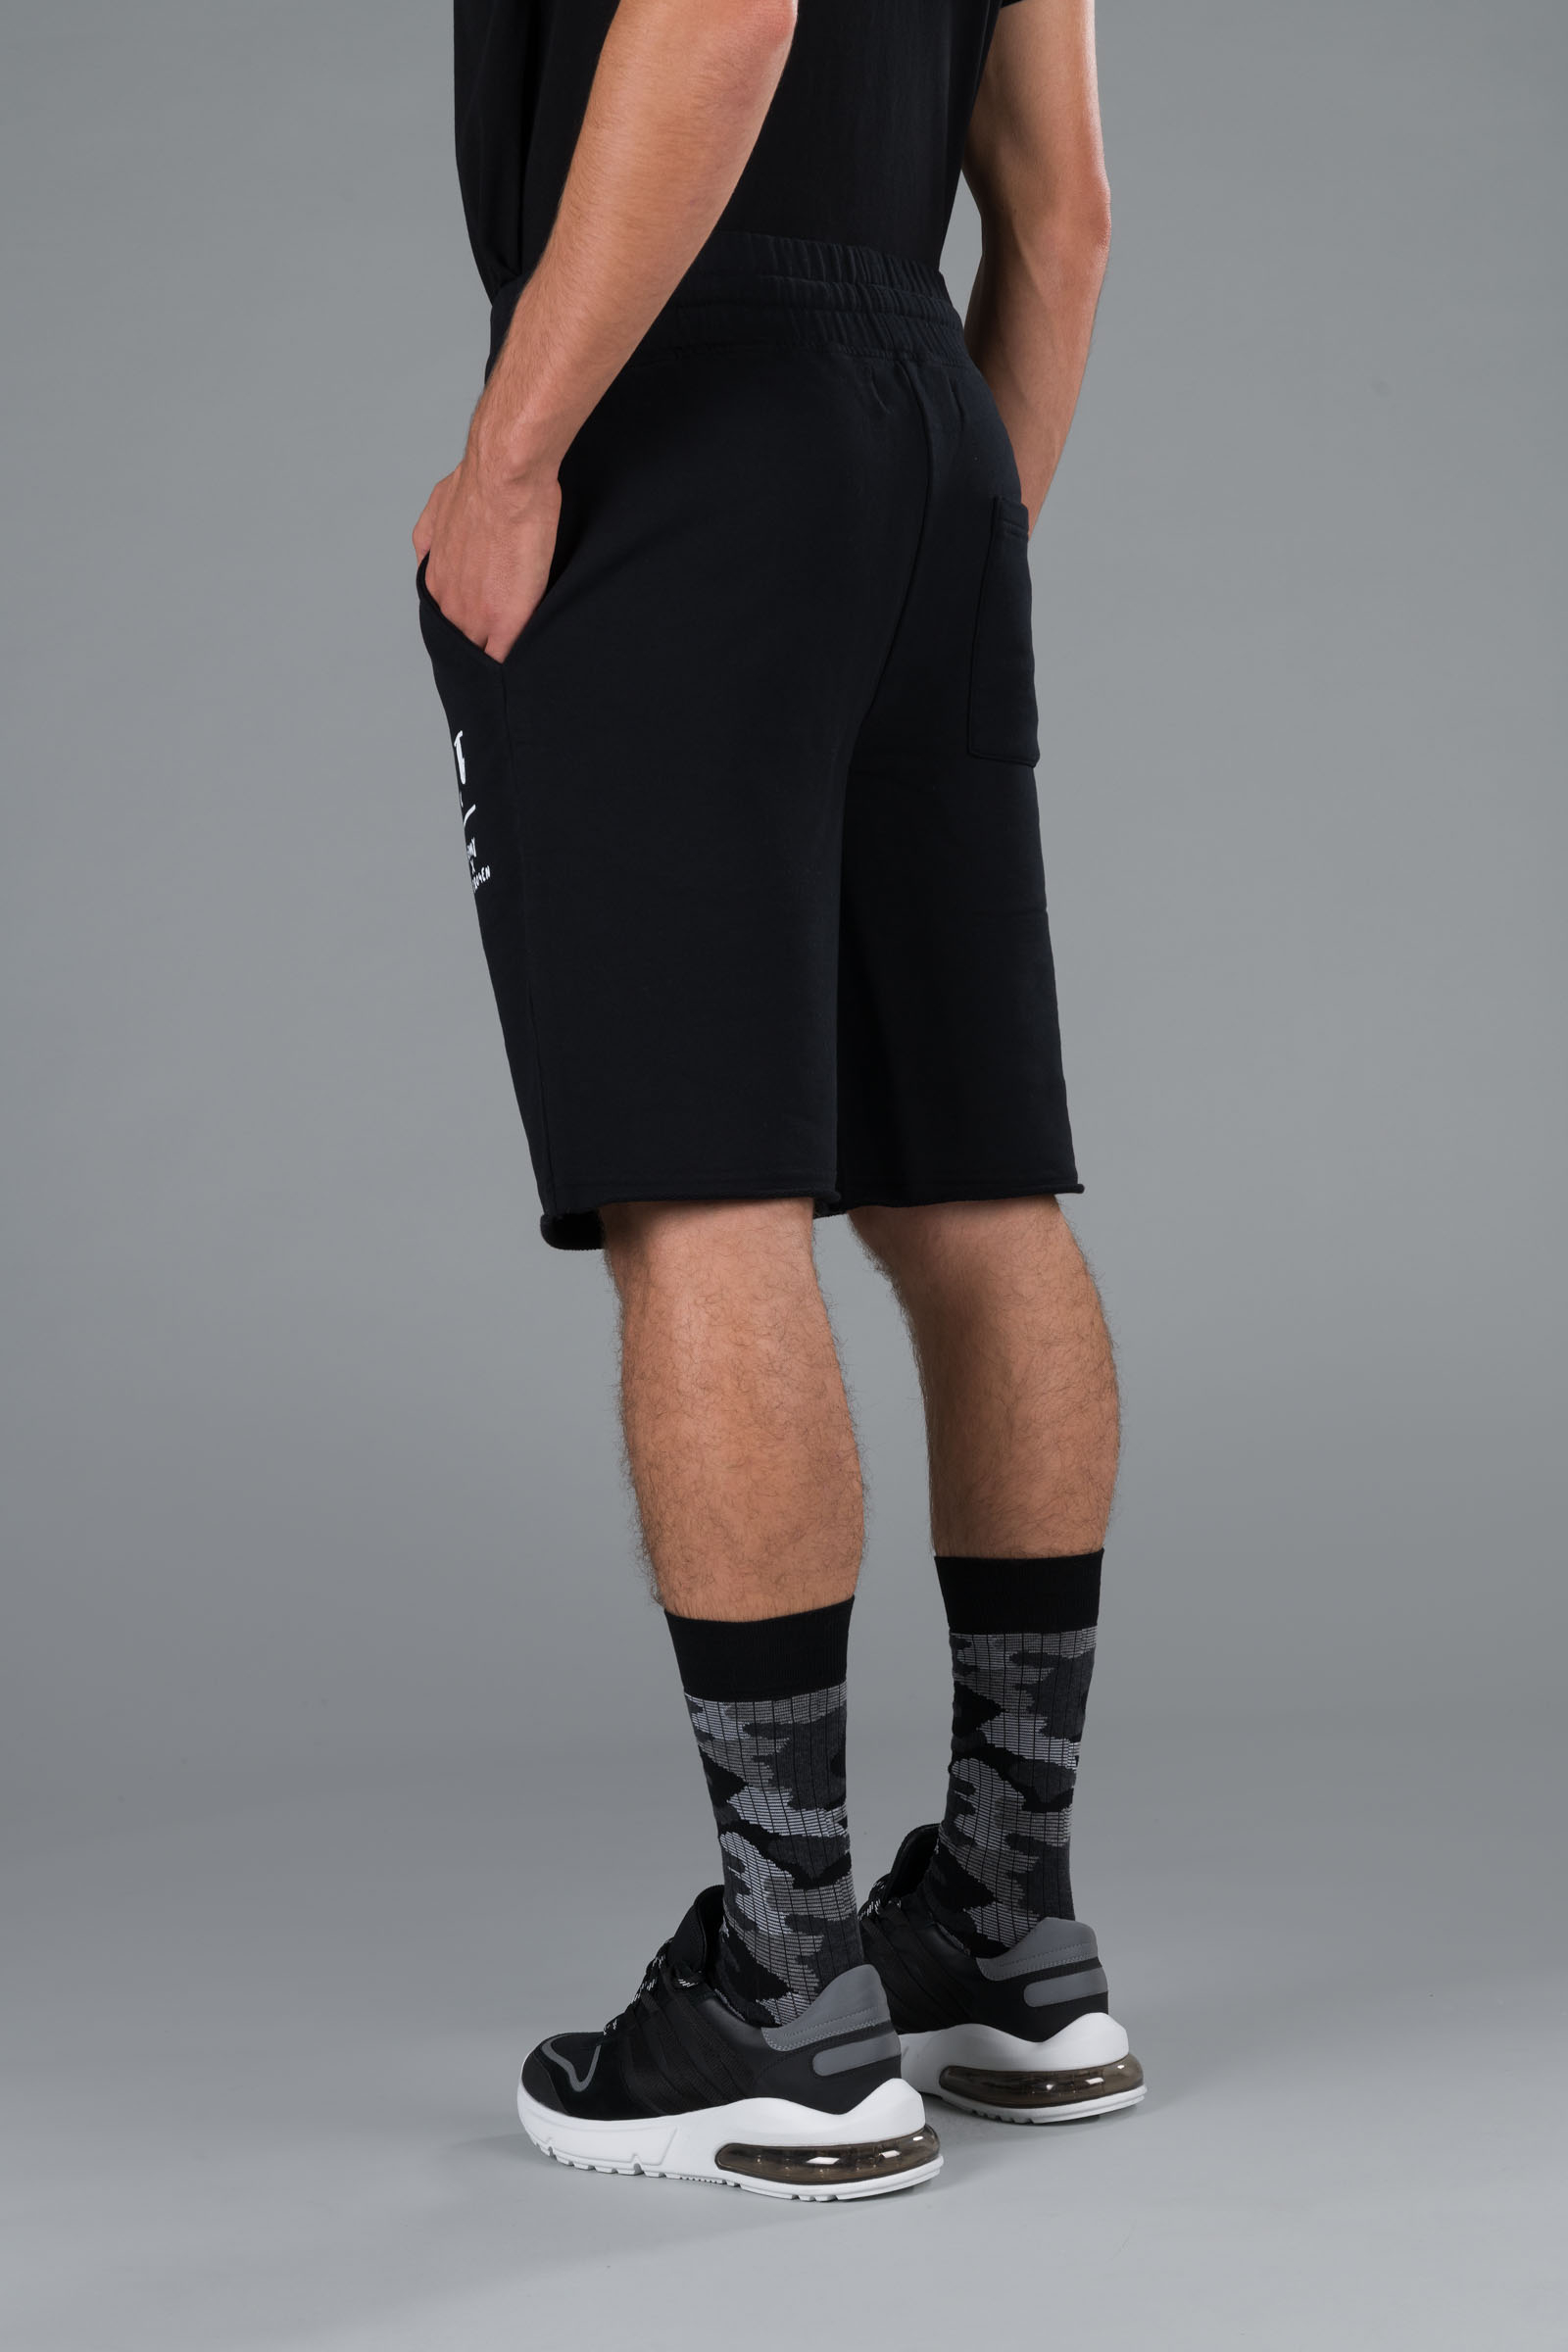 BENNY SHORTS - BLACK - Abbigliamento sportivo | Hydrogen